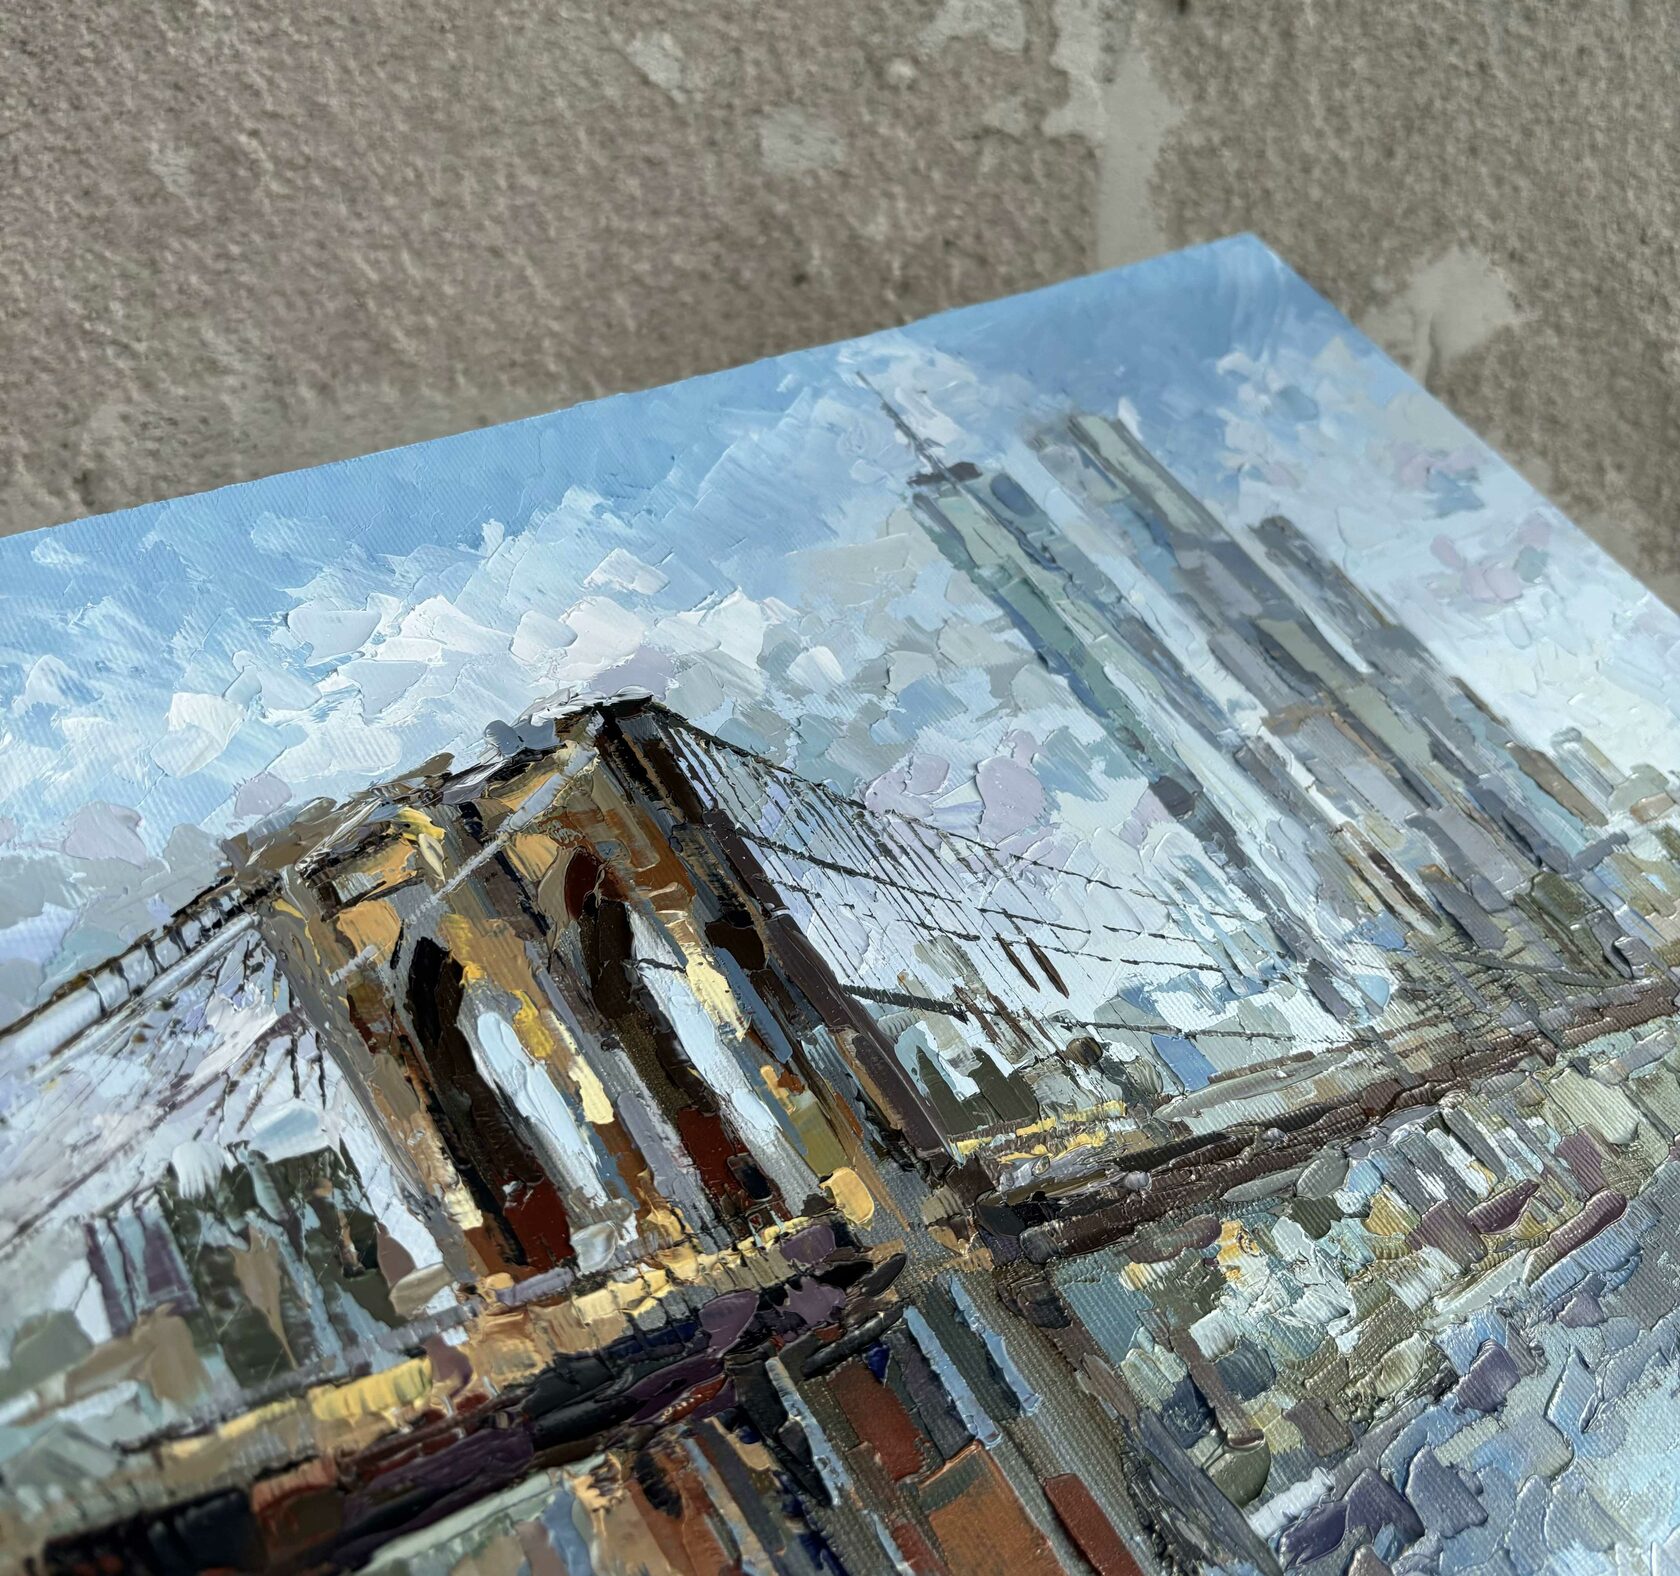 Brooklyn Bridge oil painting for sale, USA New York